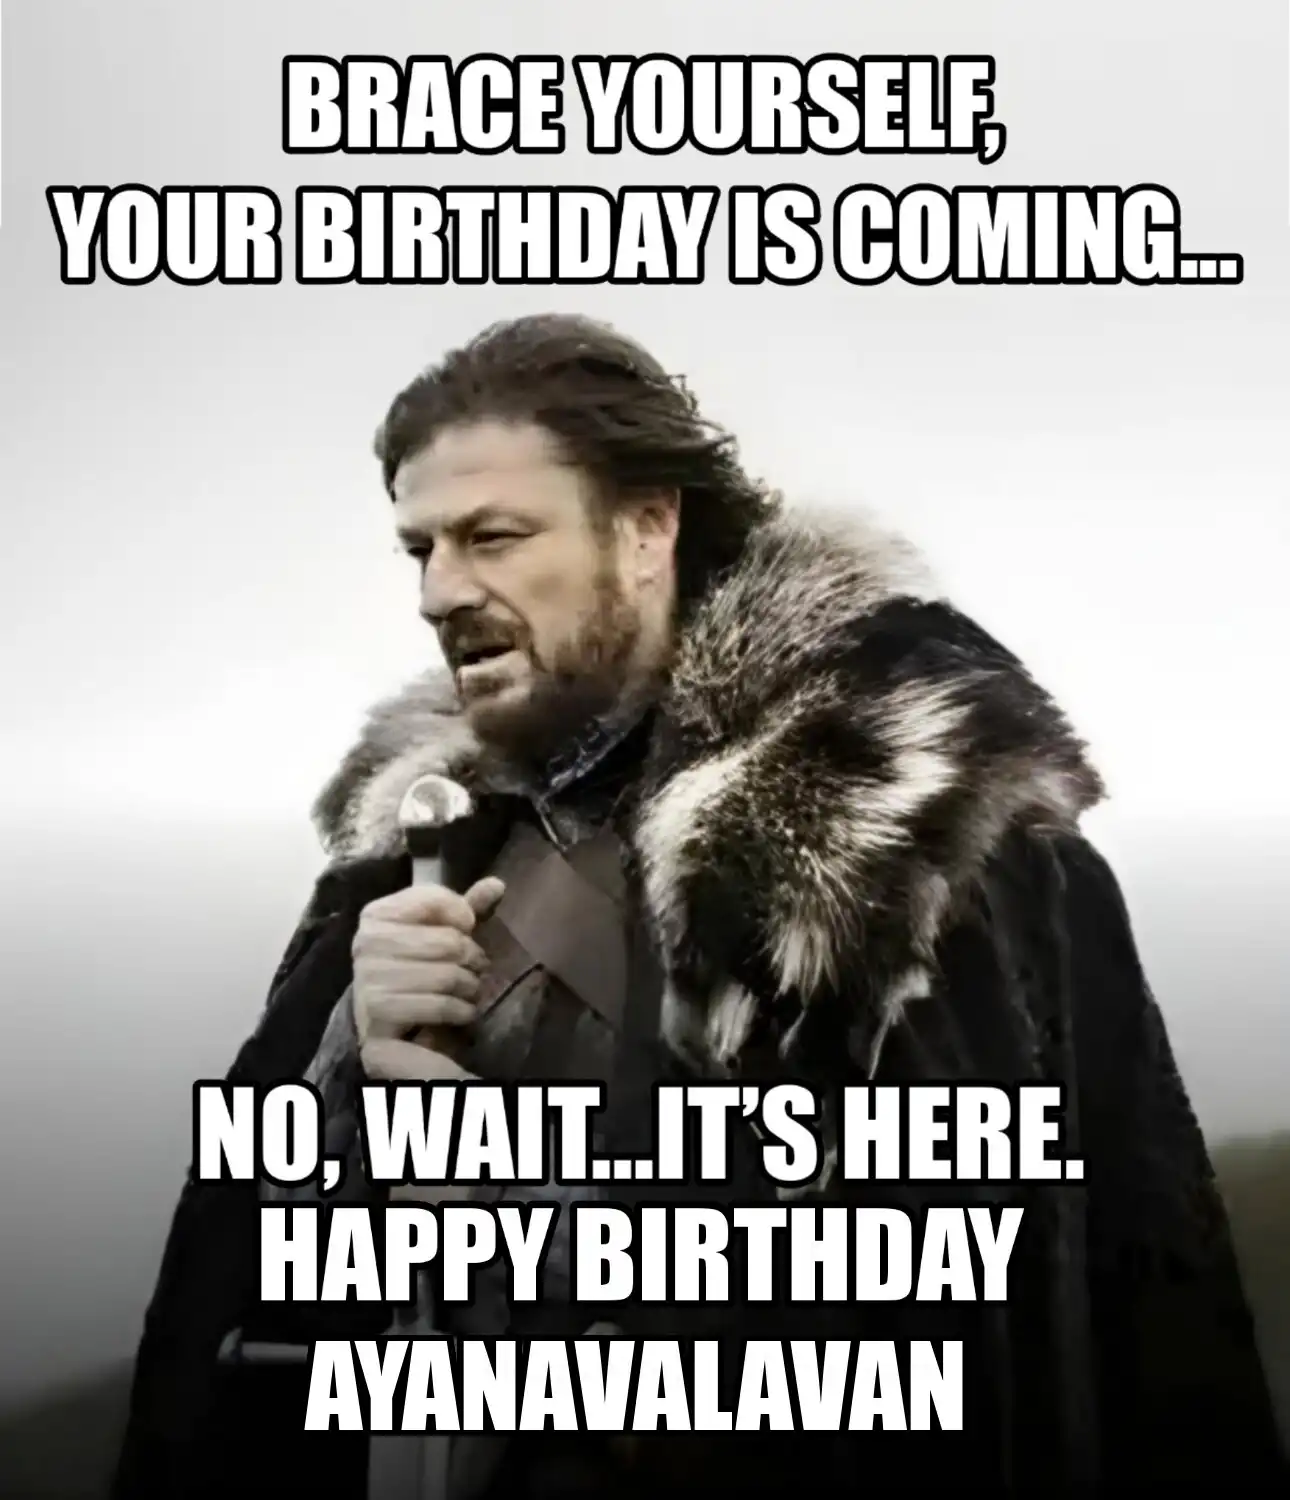 Happy Birthday Ayanavalavan Brace Yourself Your Birthday Is Coming Meme